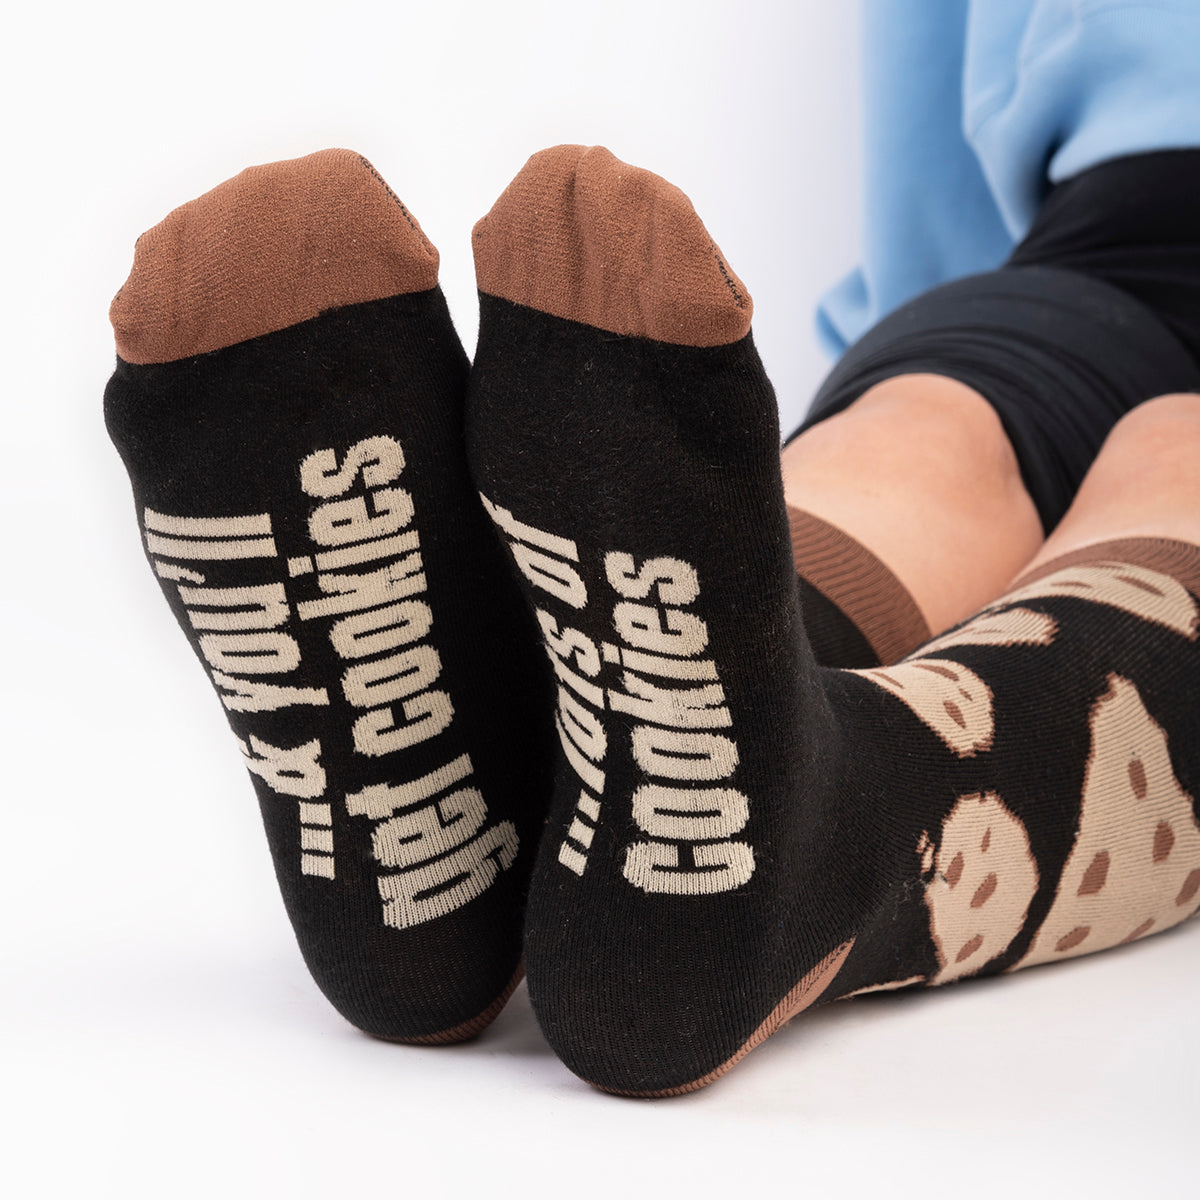 The Walking Dead You'll Get Cookies Socks